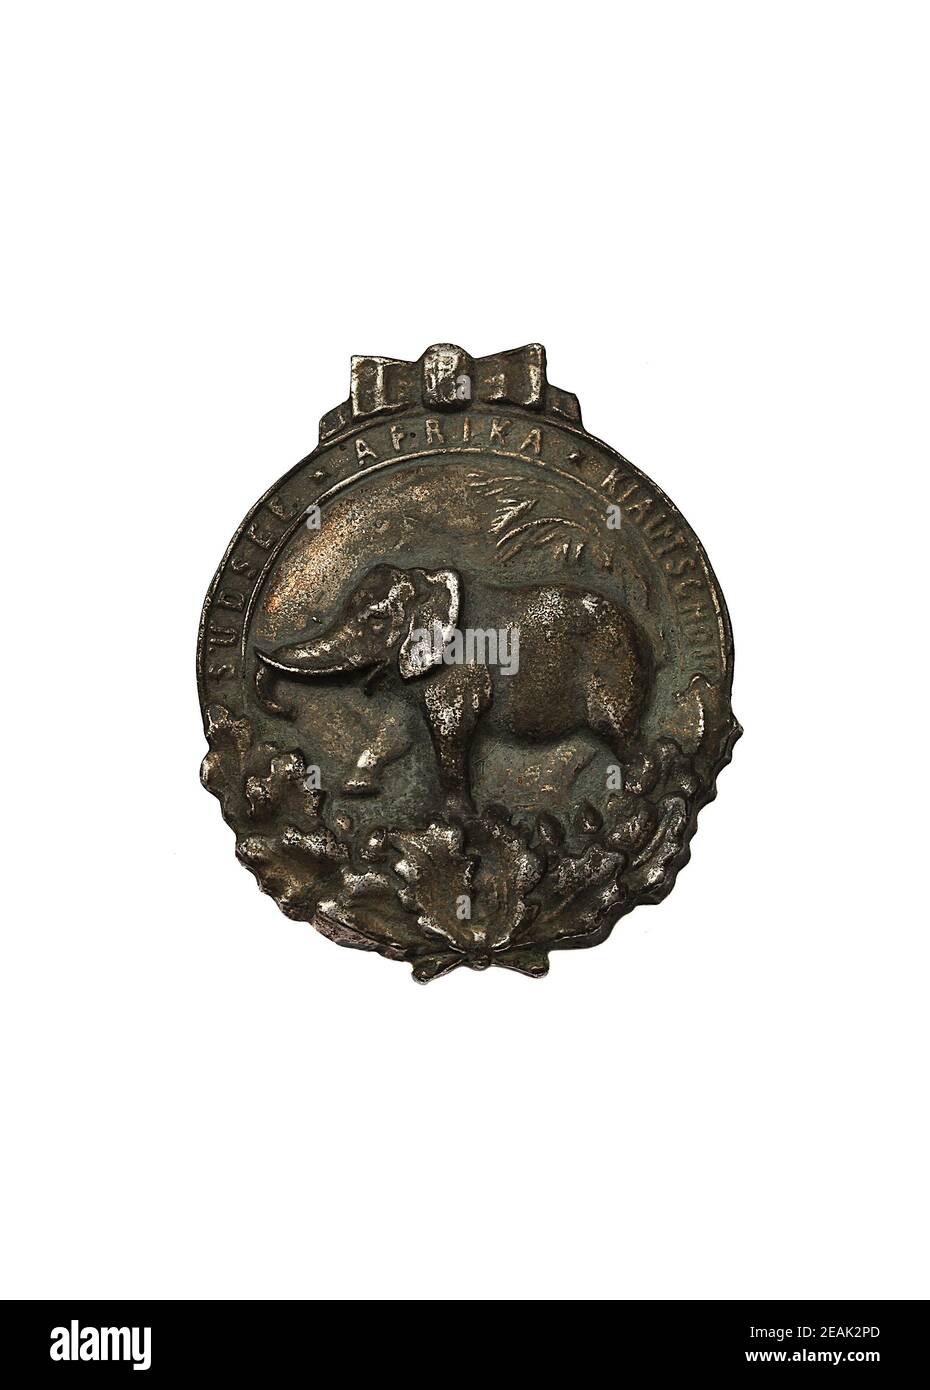 A German Colonial Honour 'Elephant' Badge. The German Colonial Honour Badge also refered to as the Elephanten orden (Elephant's Order). Stock Photo